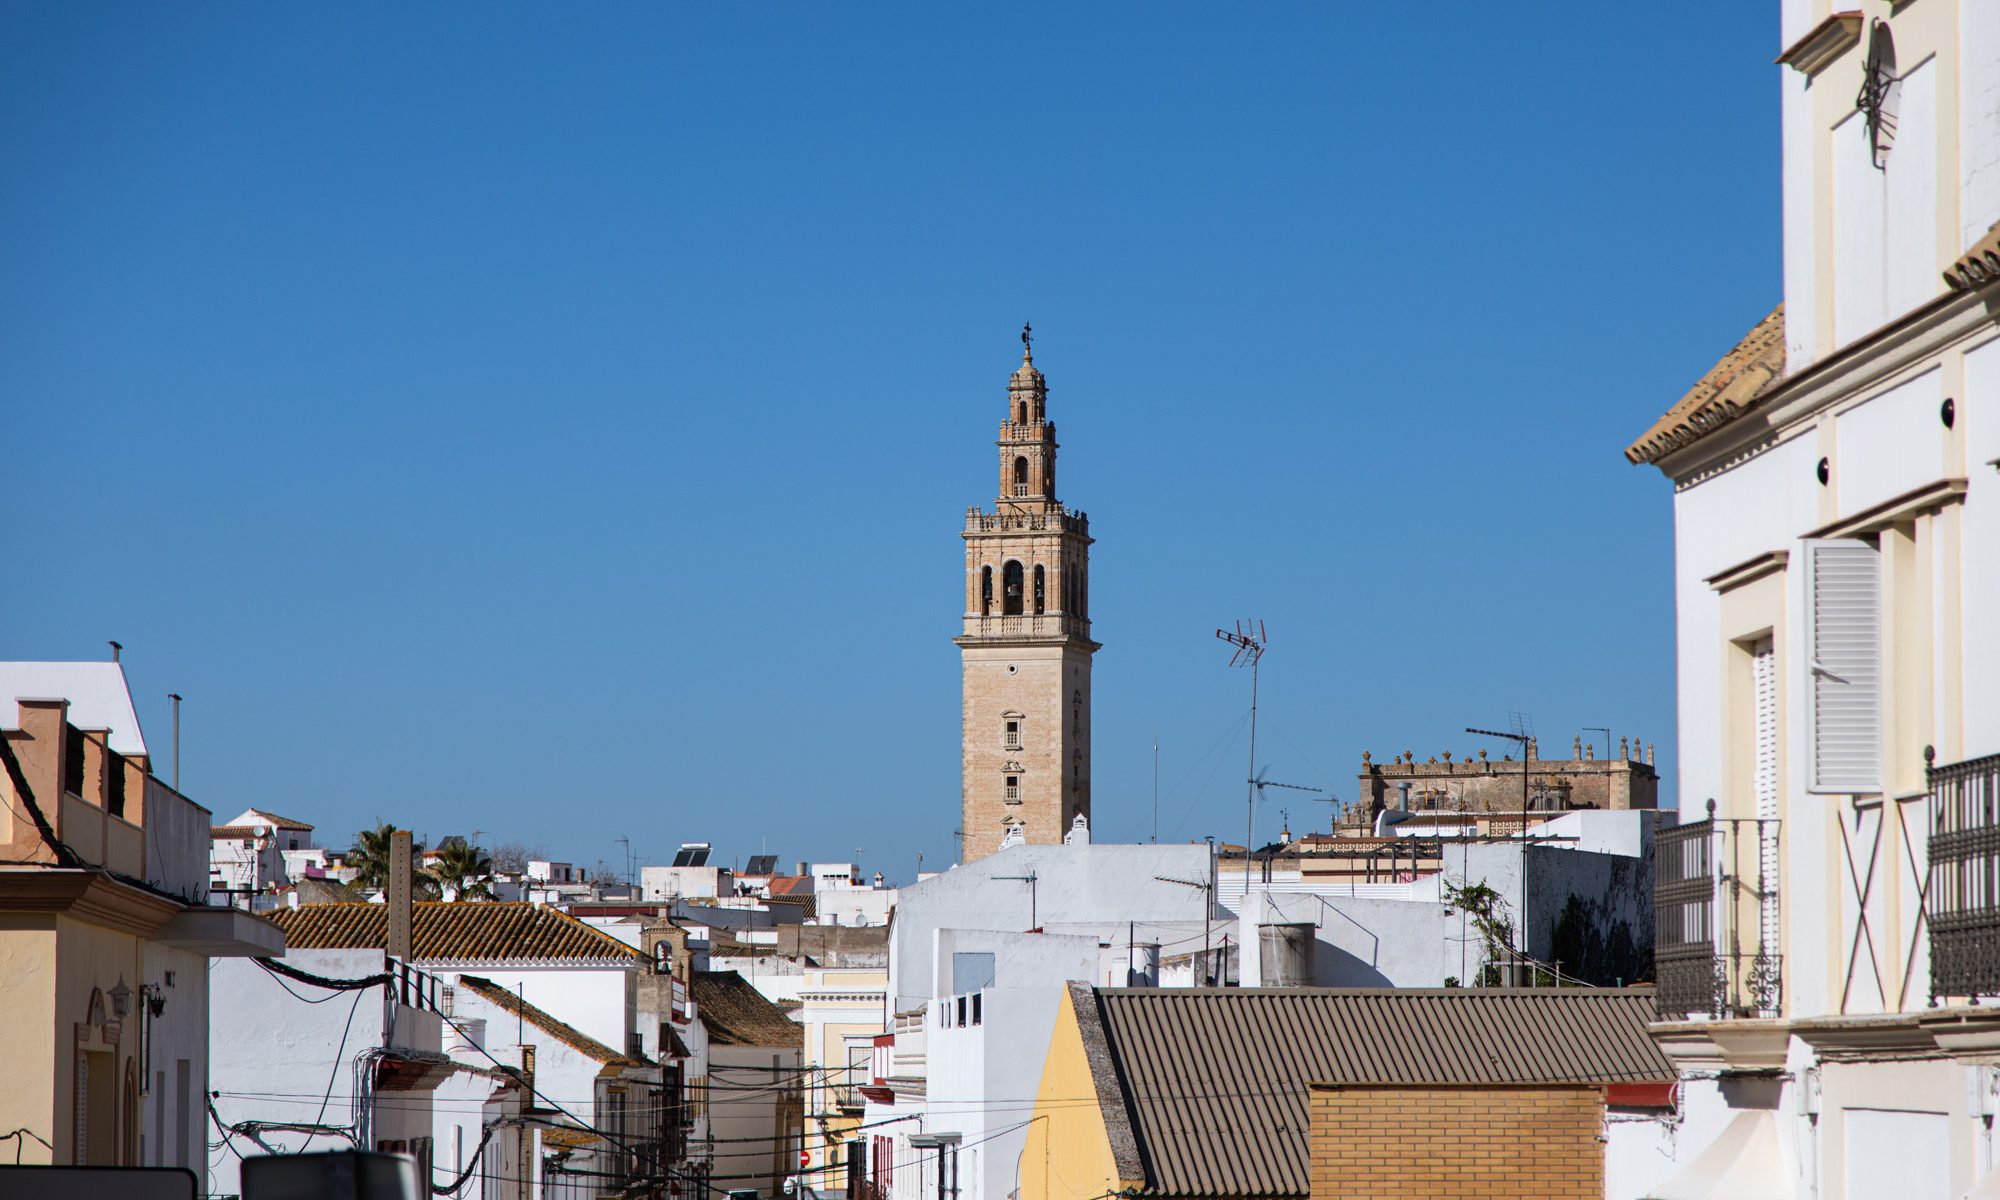 Torre giraldilla de Lebrija, pertenece a la iglesia de nuestra señora de la oliva.